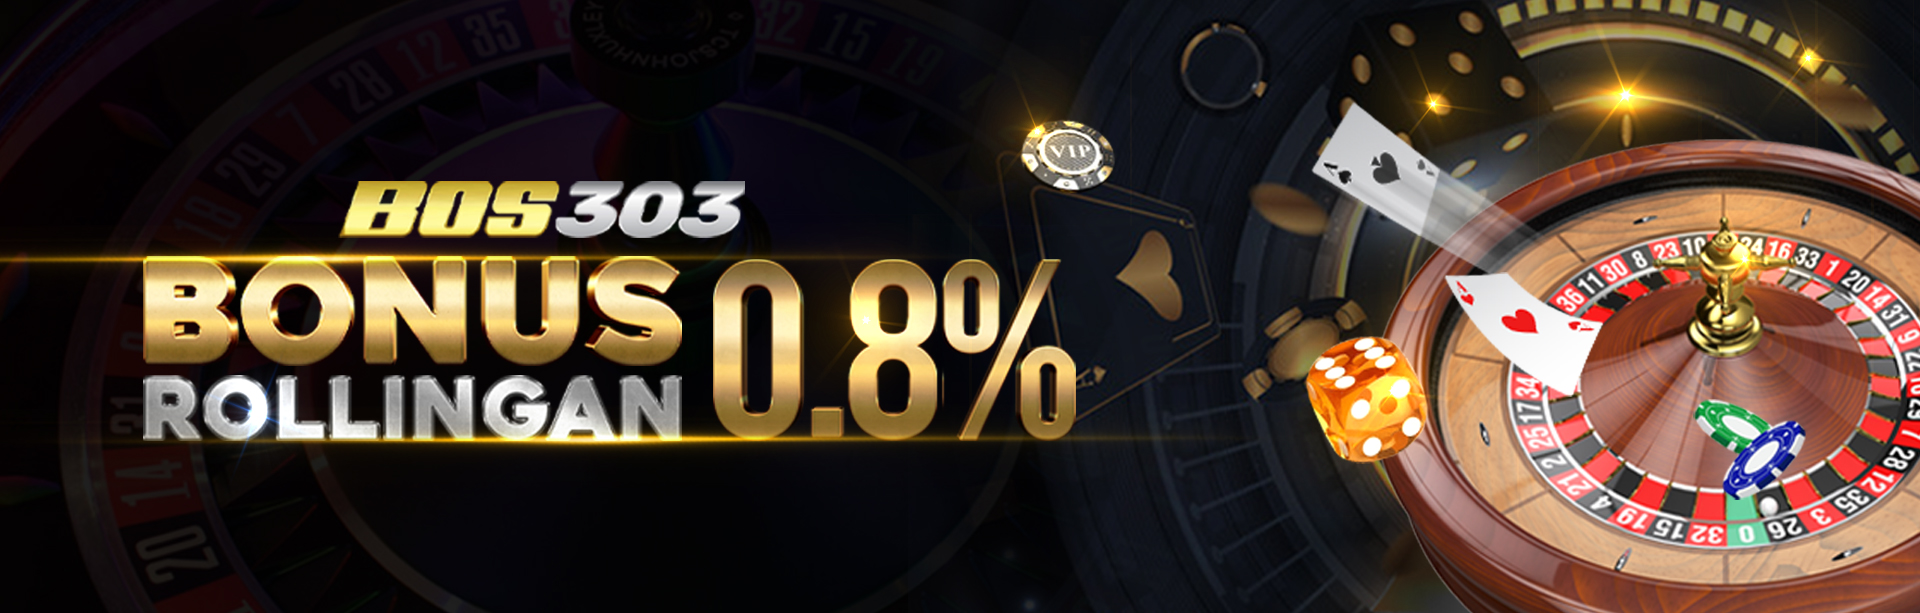 Rolingan casino 0.8%